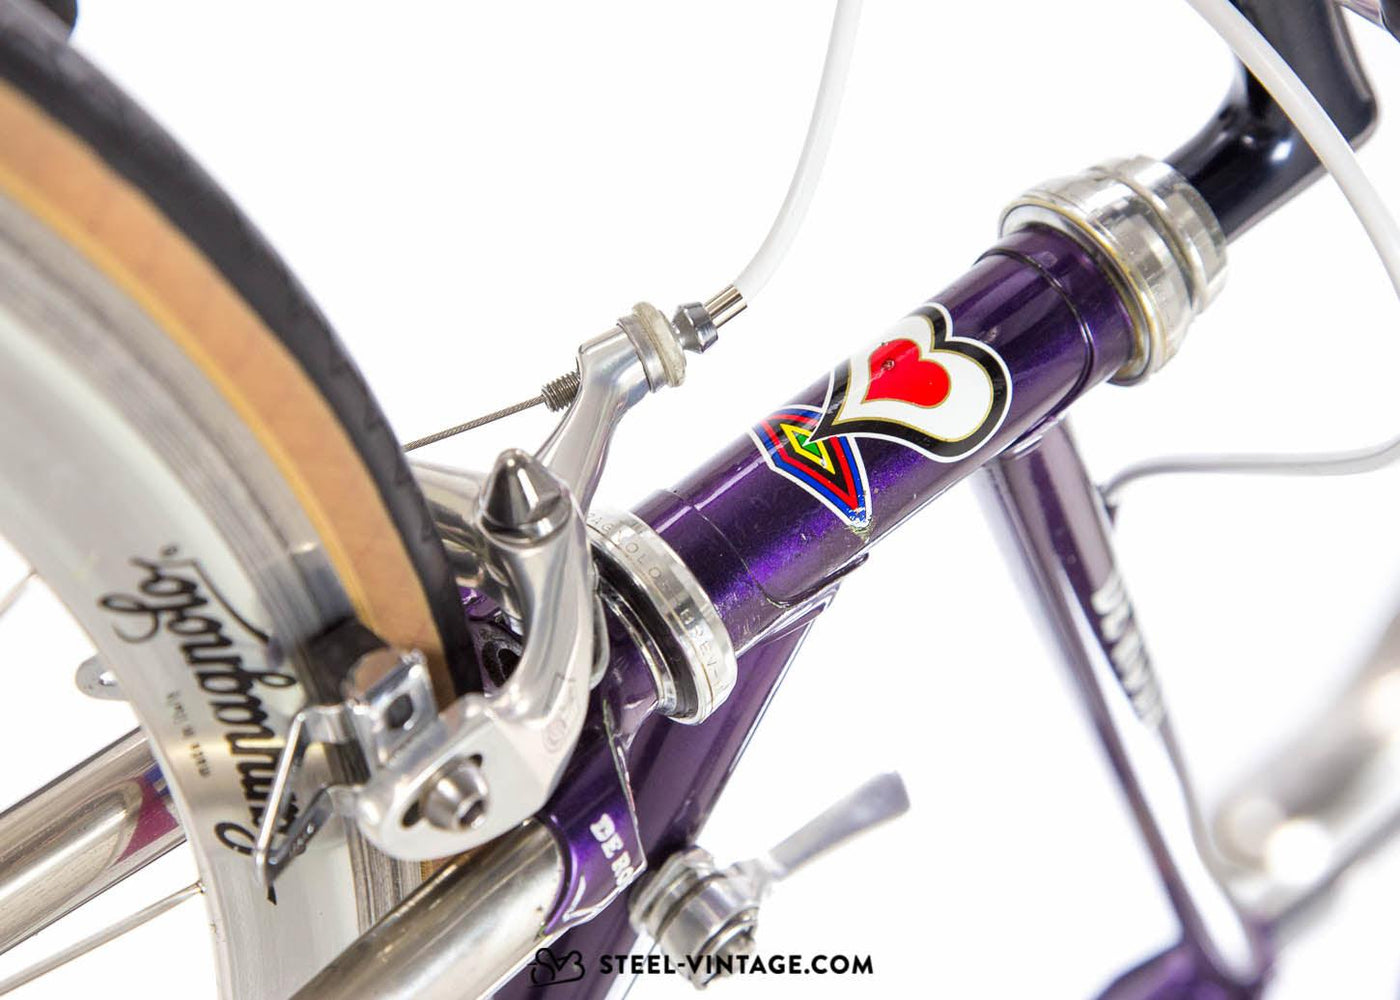 De Rosa SLX Classic Road Bike 1990s - Steel Vintage Bikes